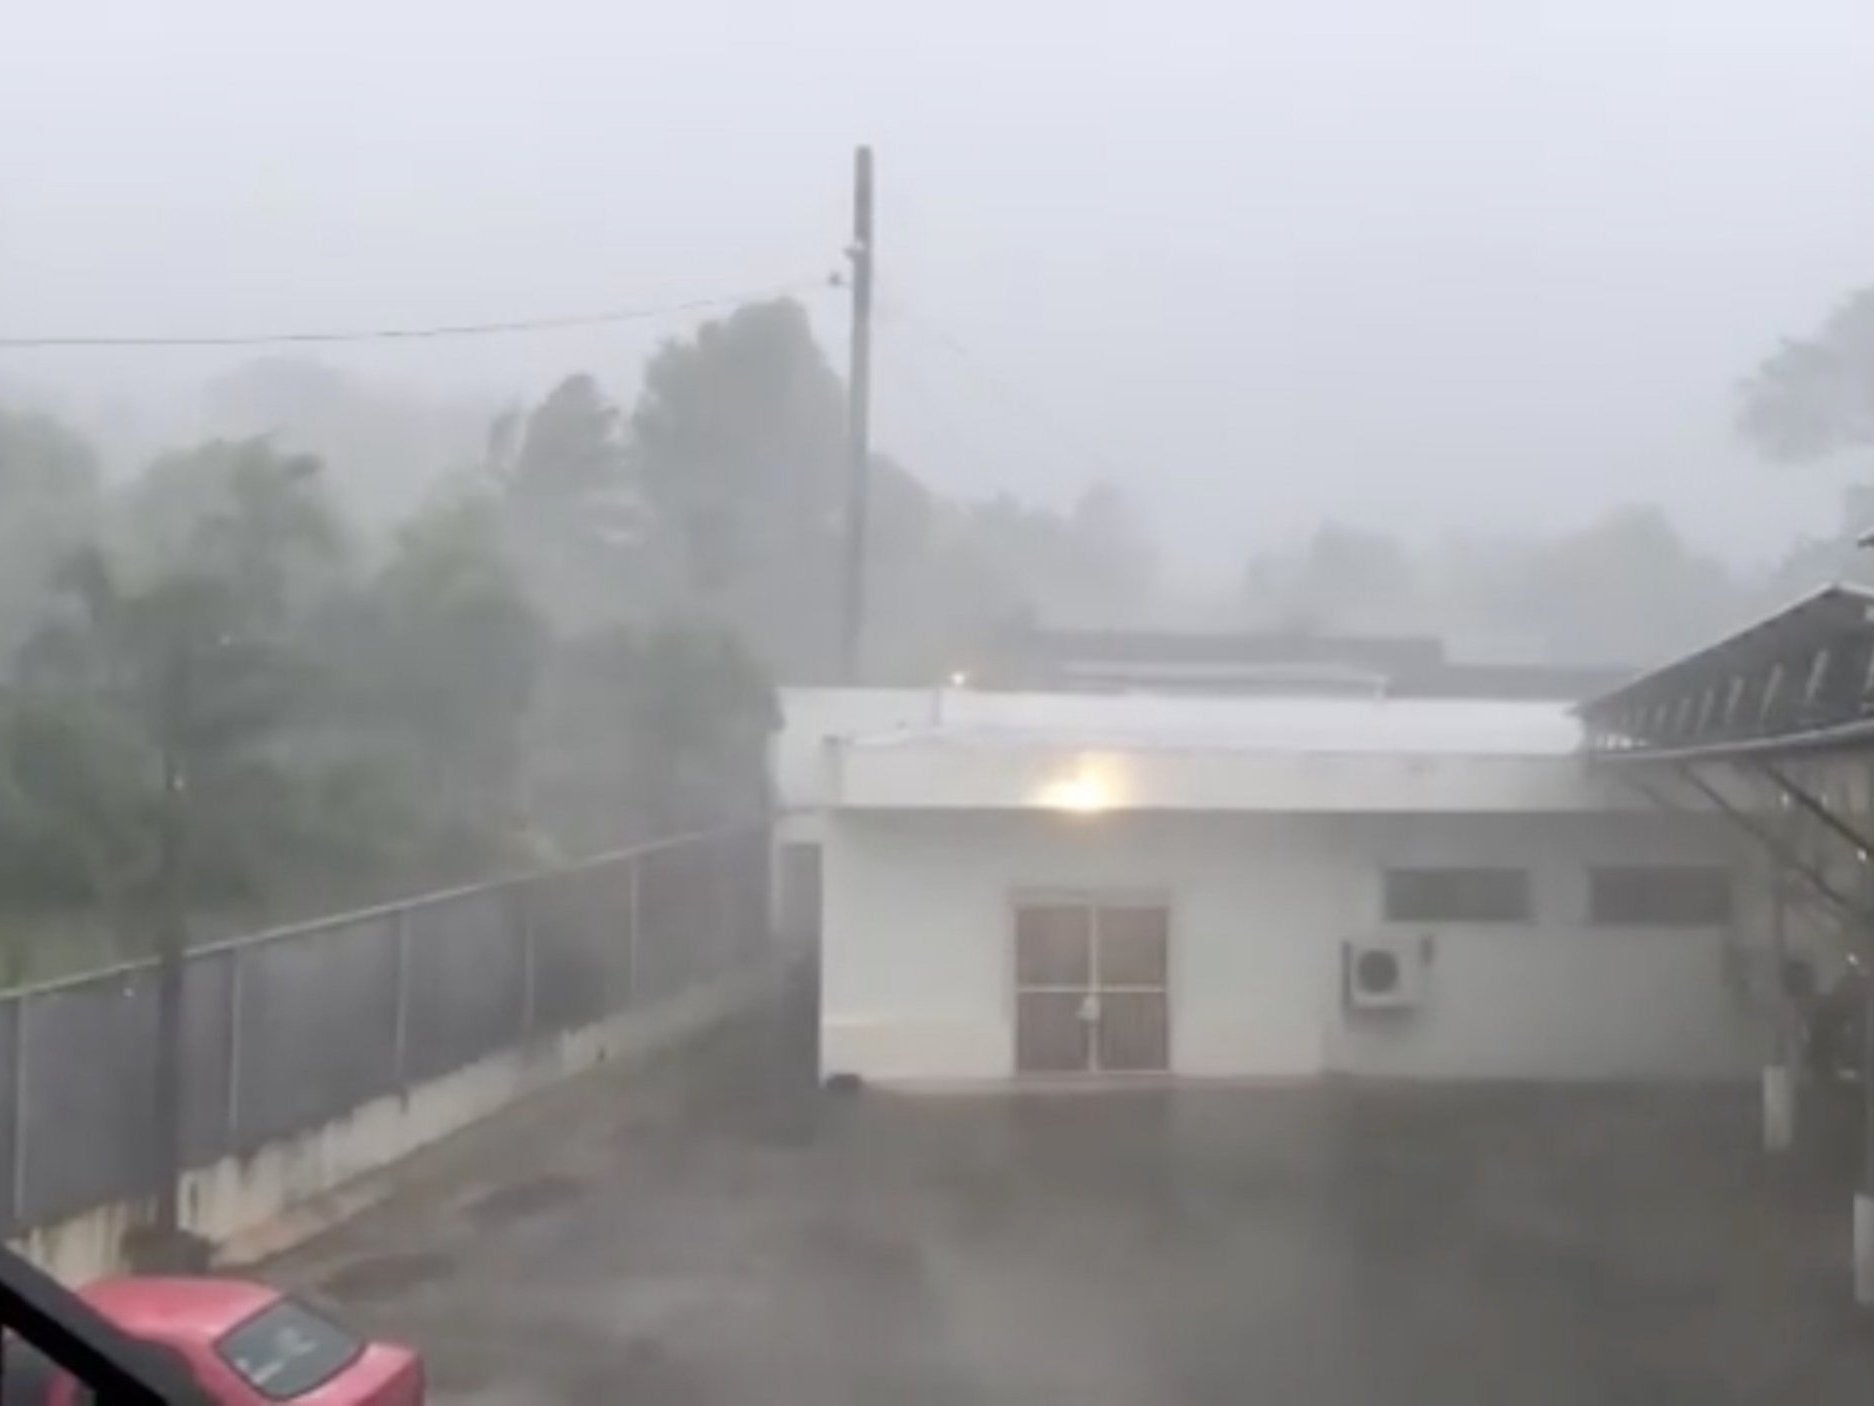 A storm batters buildings as Super Typhoon Yutu descends upon Saipan